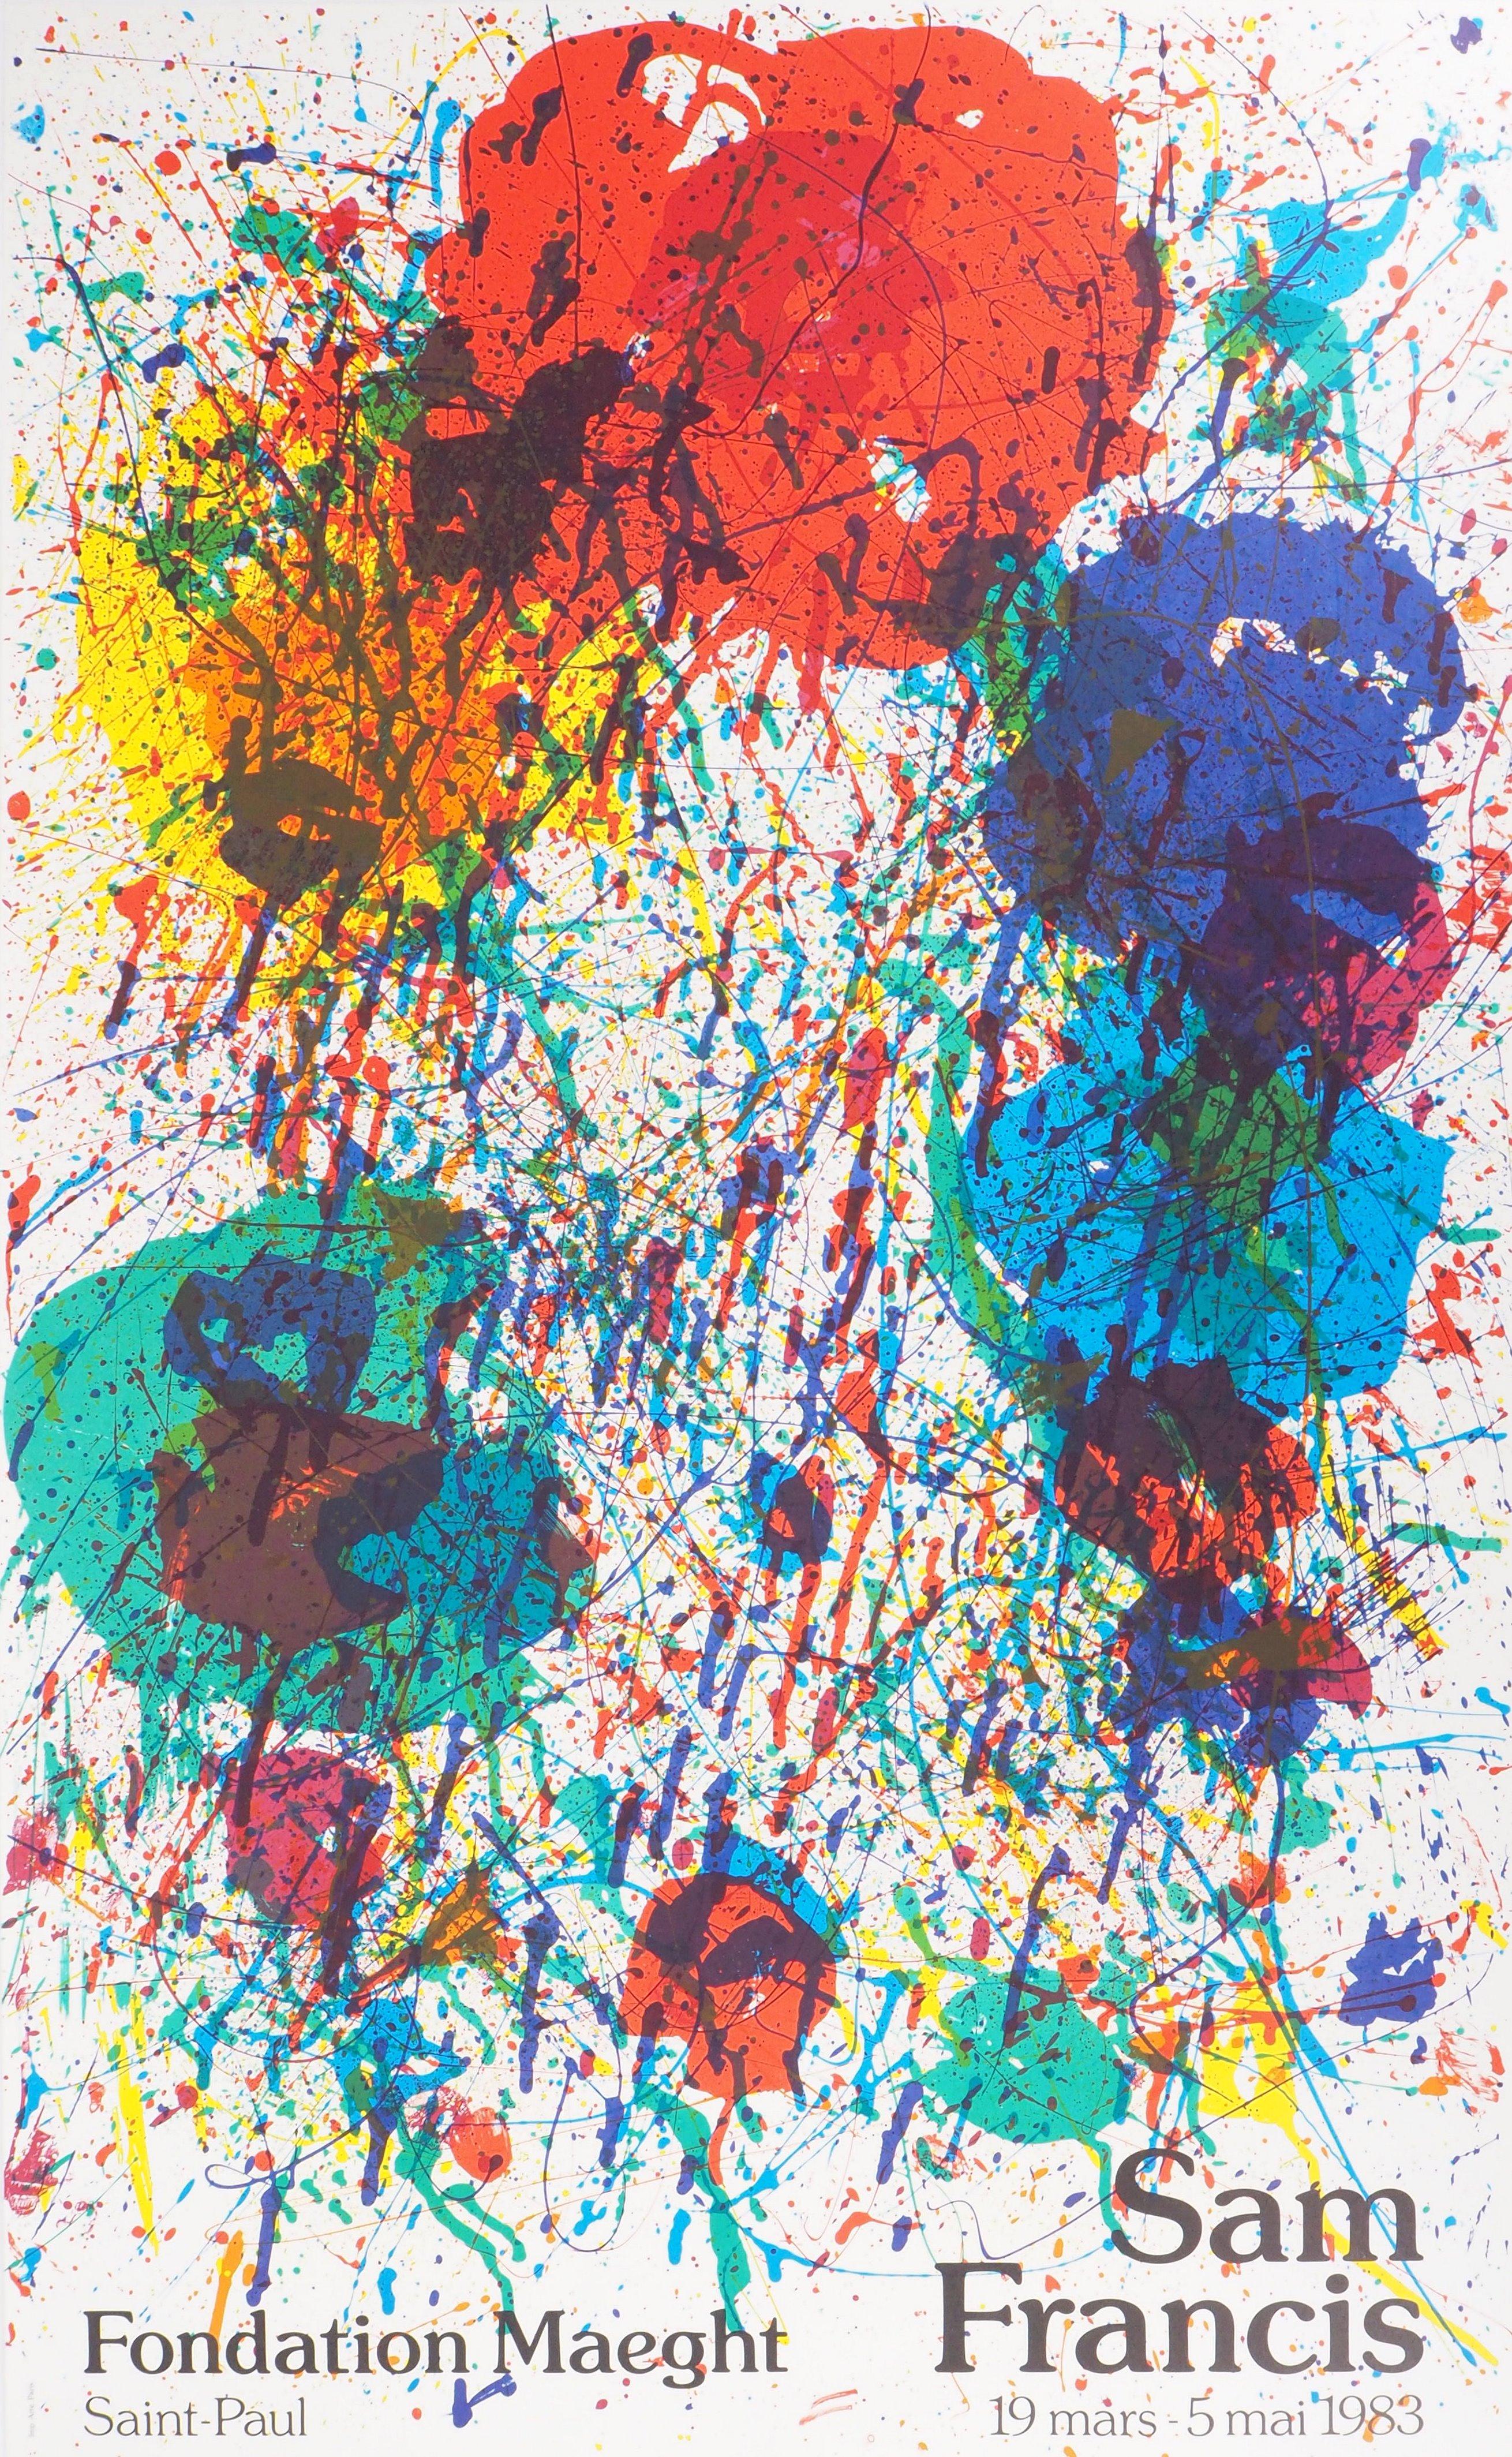 Sam Francis Abstract Print - Color Explosion - Original lithograph (Maeght 1983)